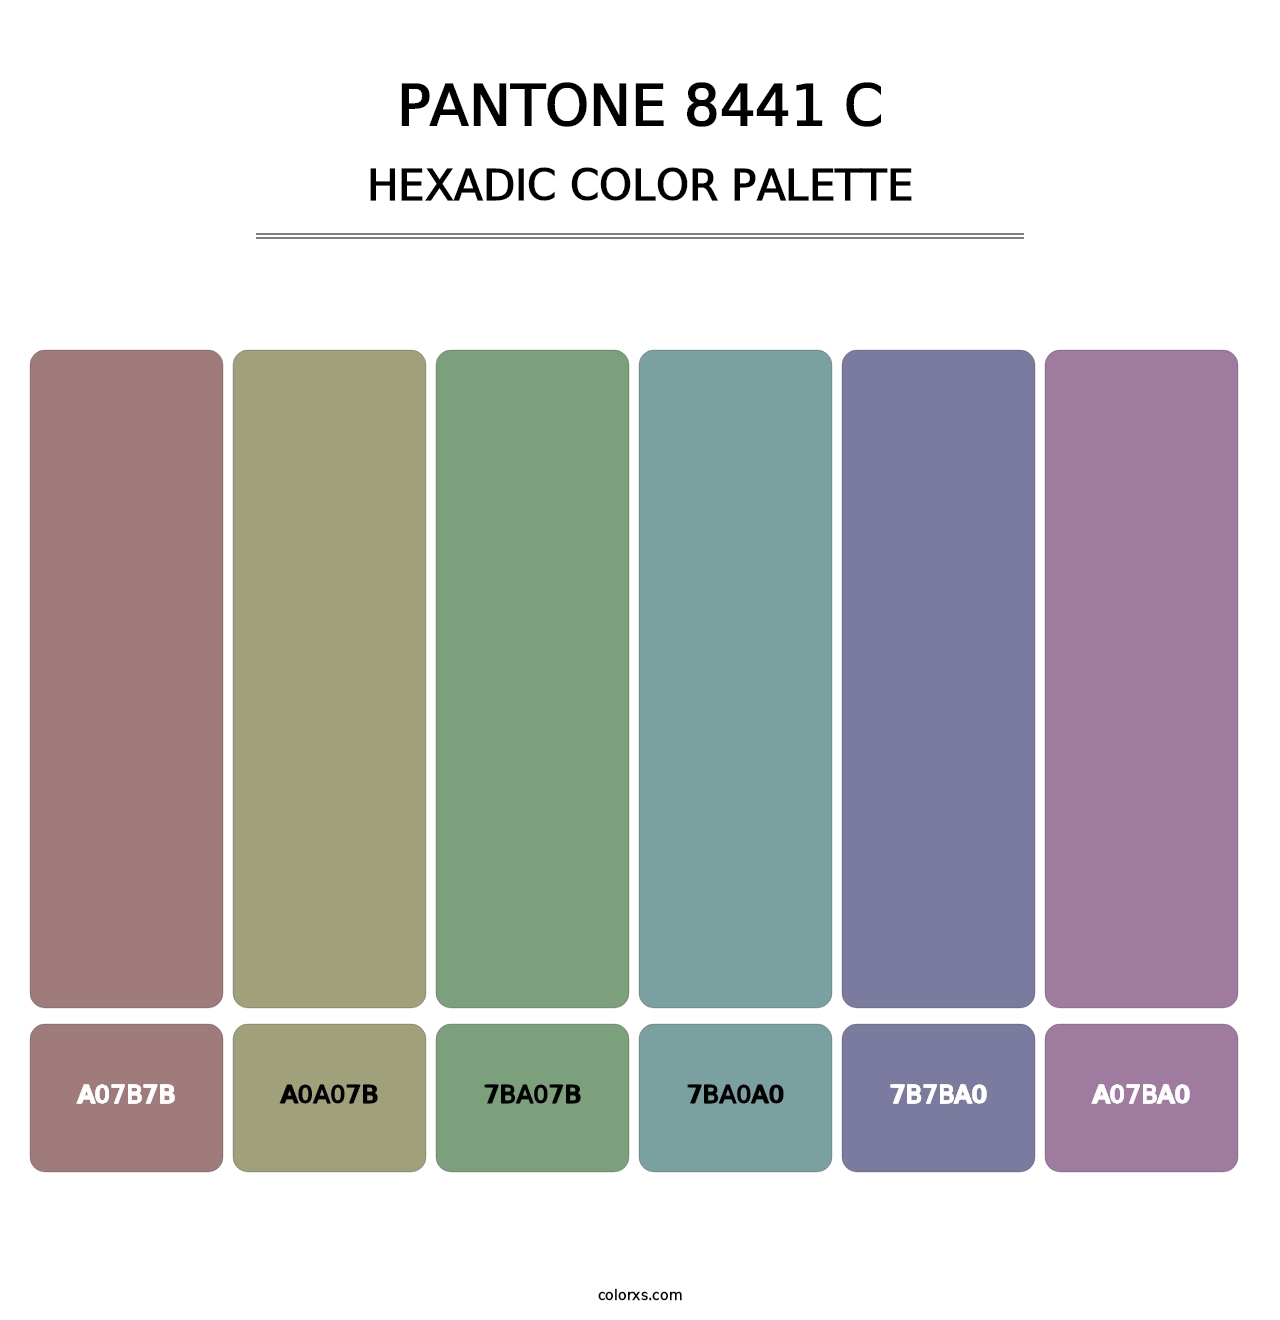 PANTONE 8441 C - Hexadic Color Palette